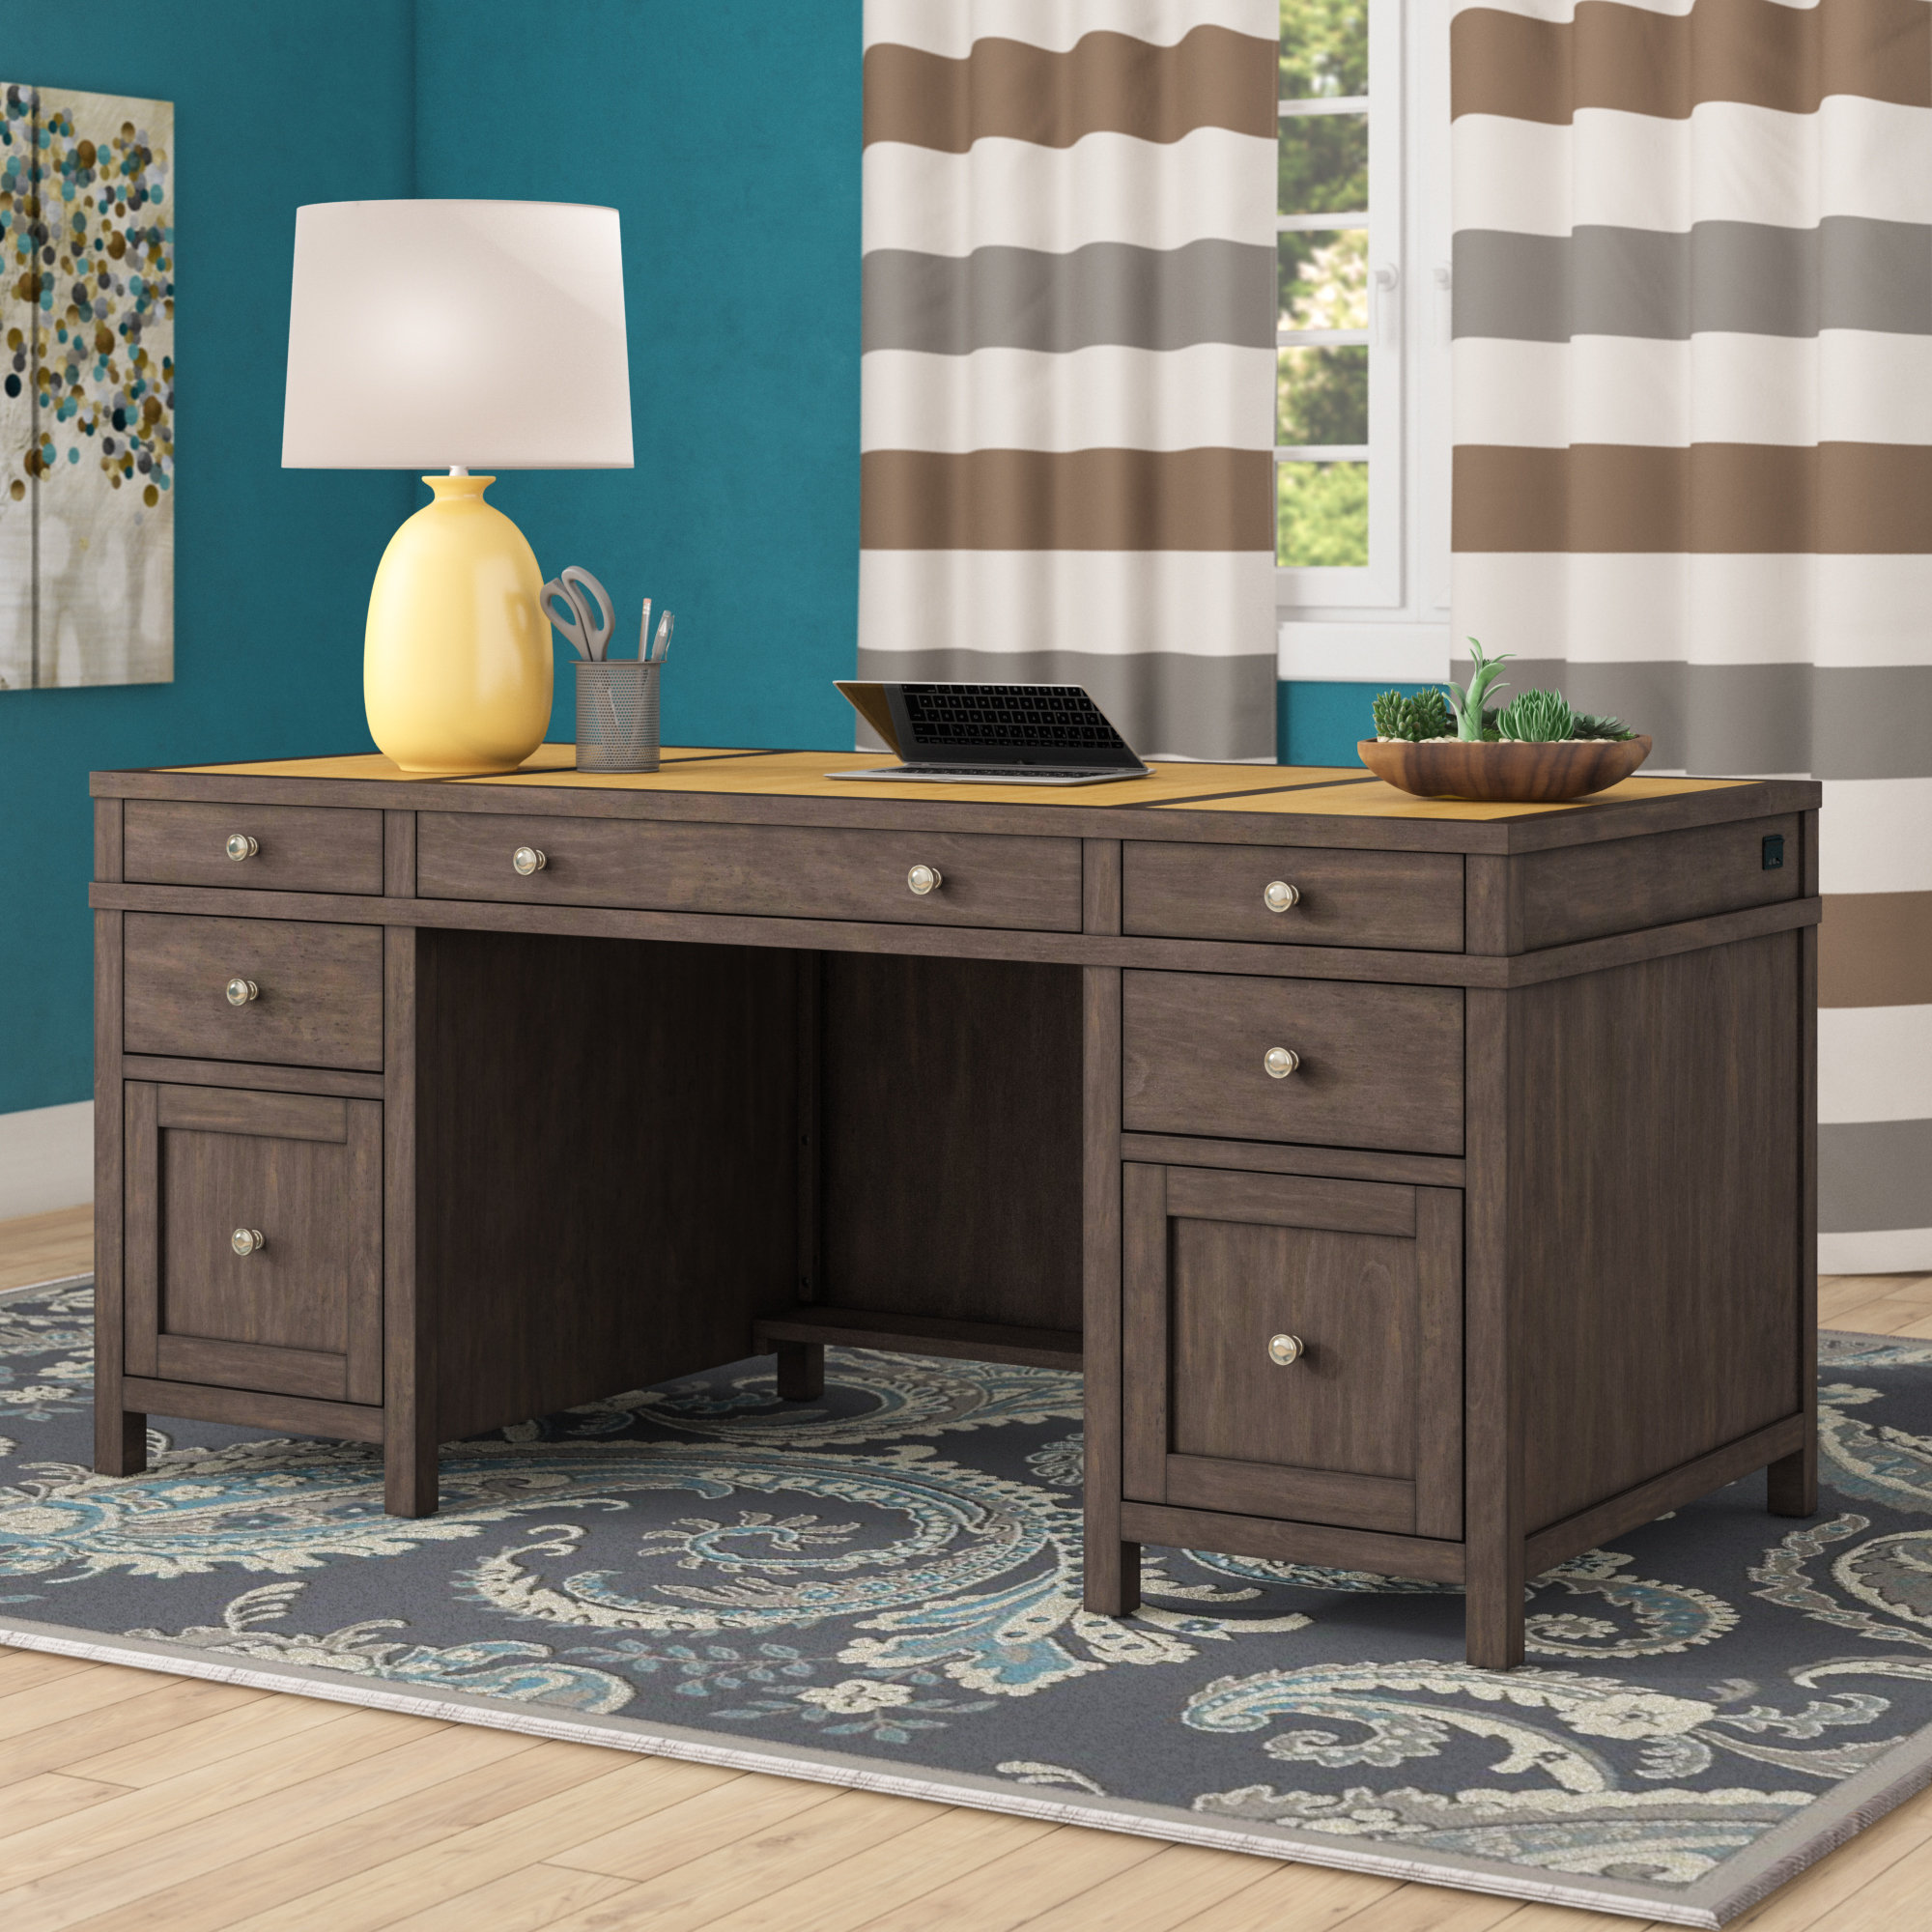 Hooker Furniture South Park Solid Wood Executive Desk Reviews